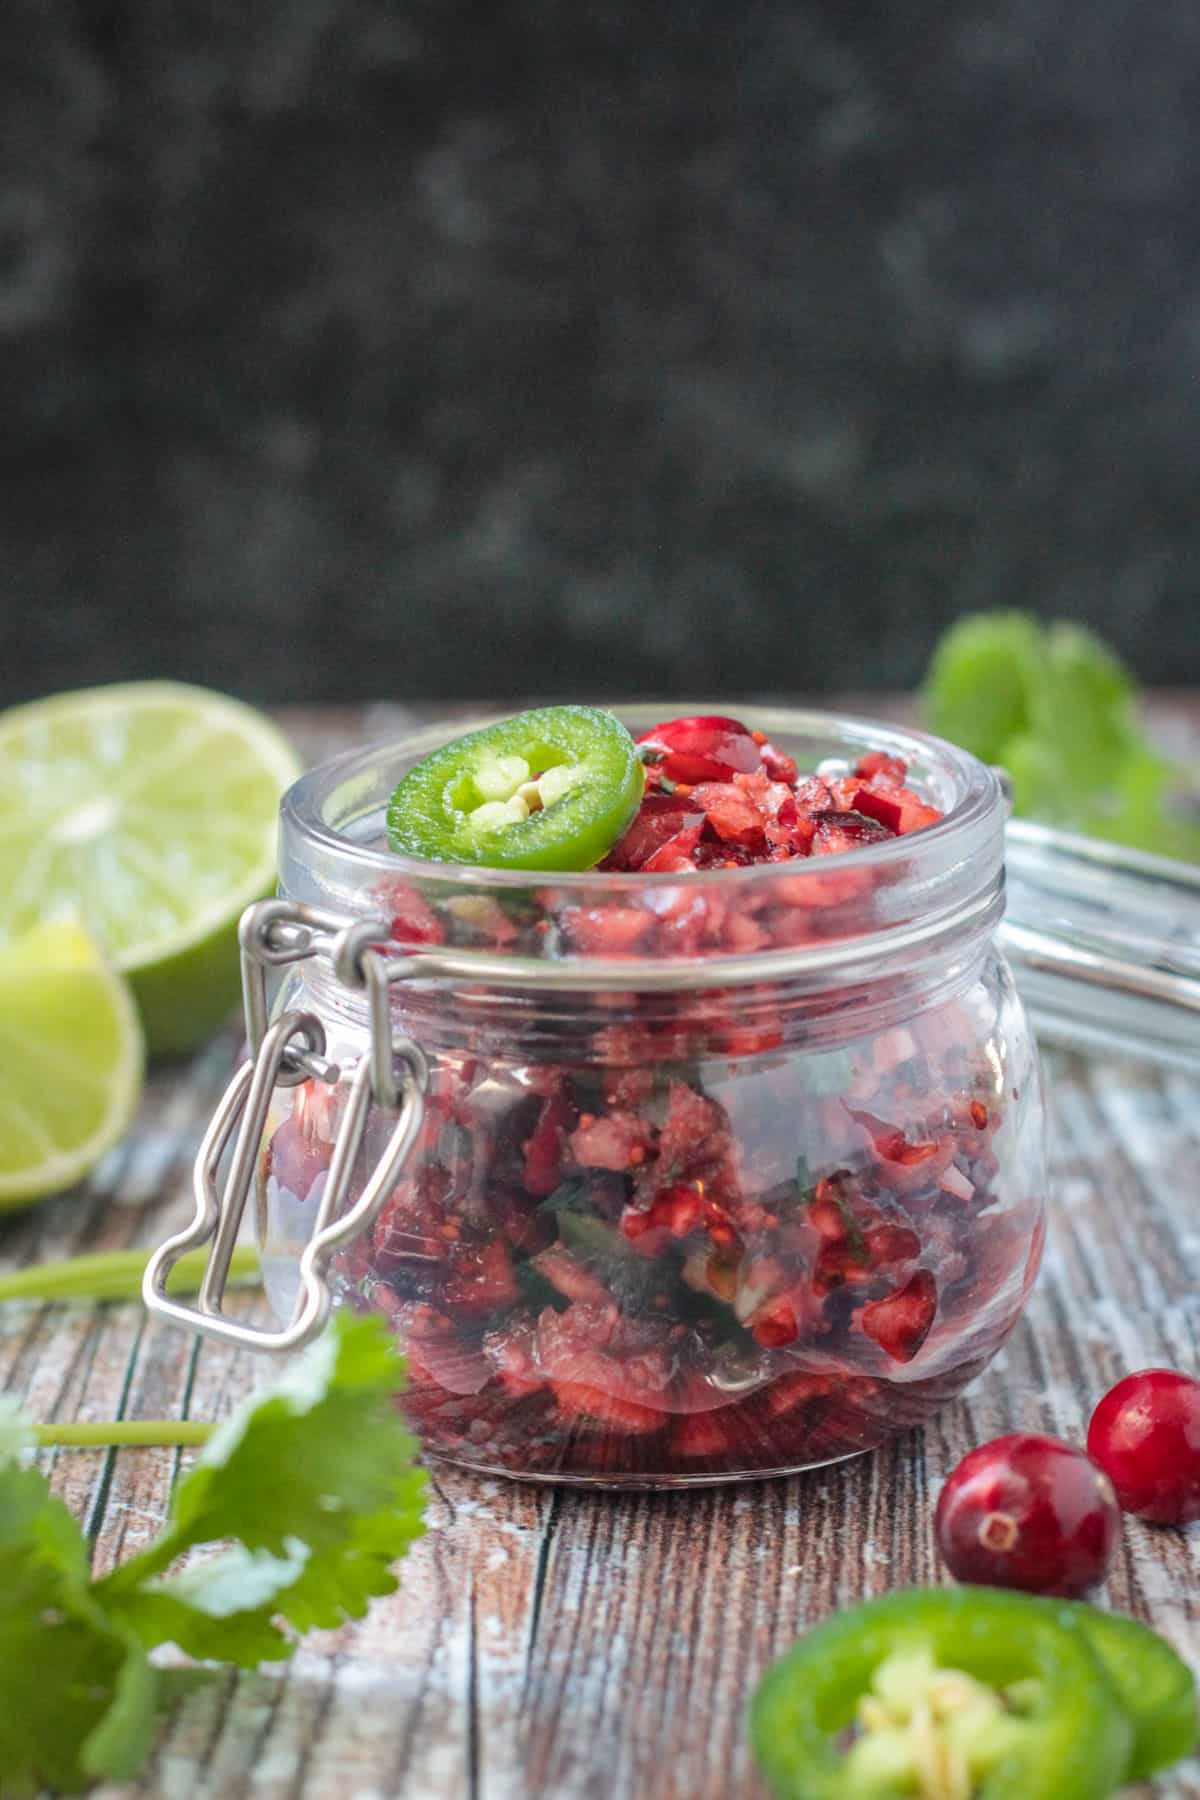 Cranberry salsa in a small glass jar.